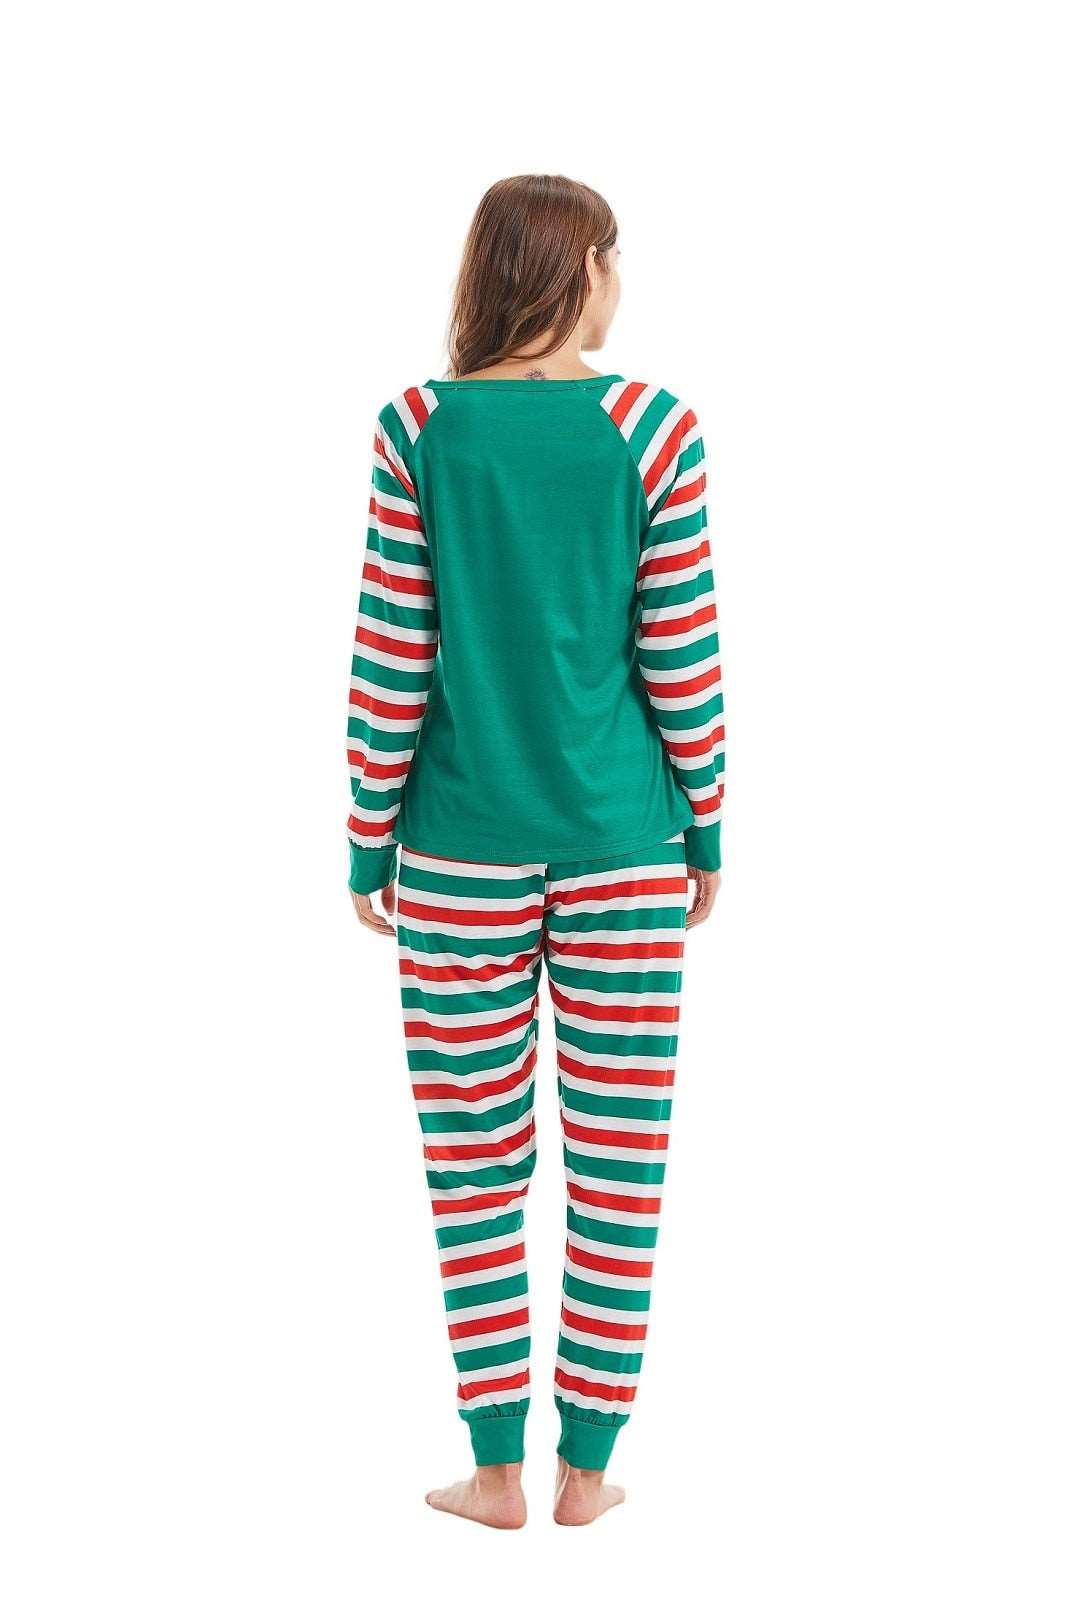 2022 Christmas Matching Family Pajamas Set